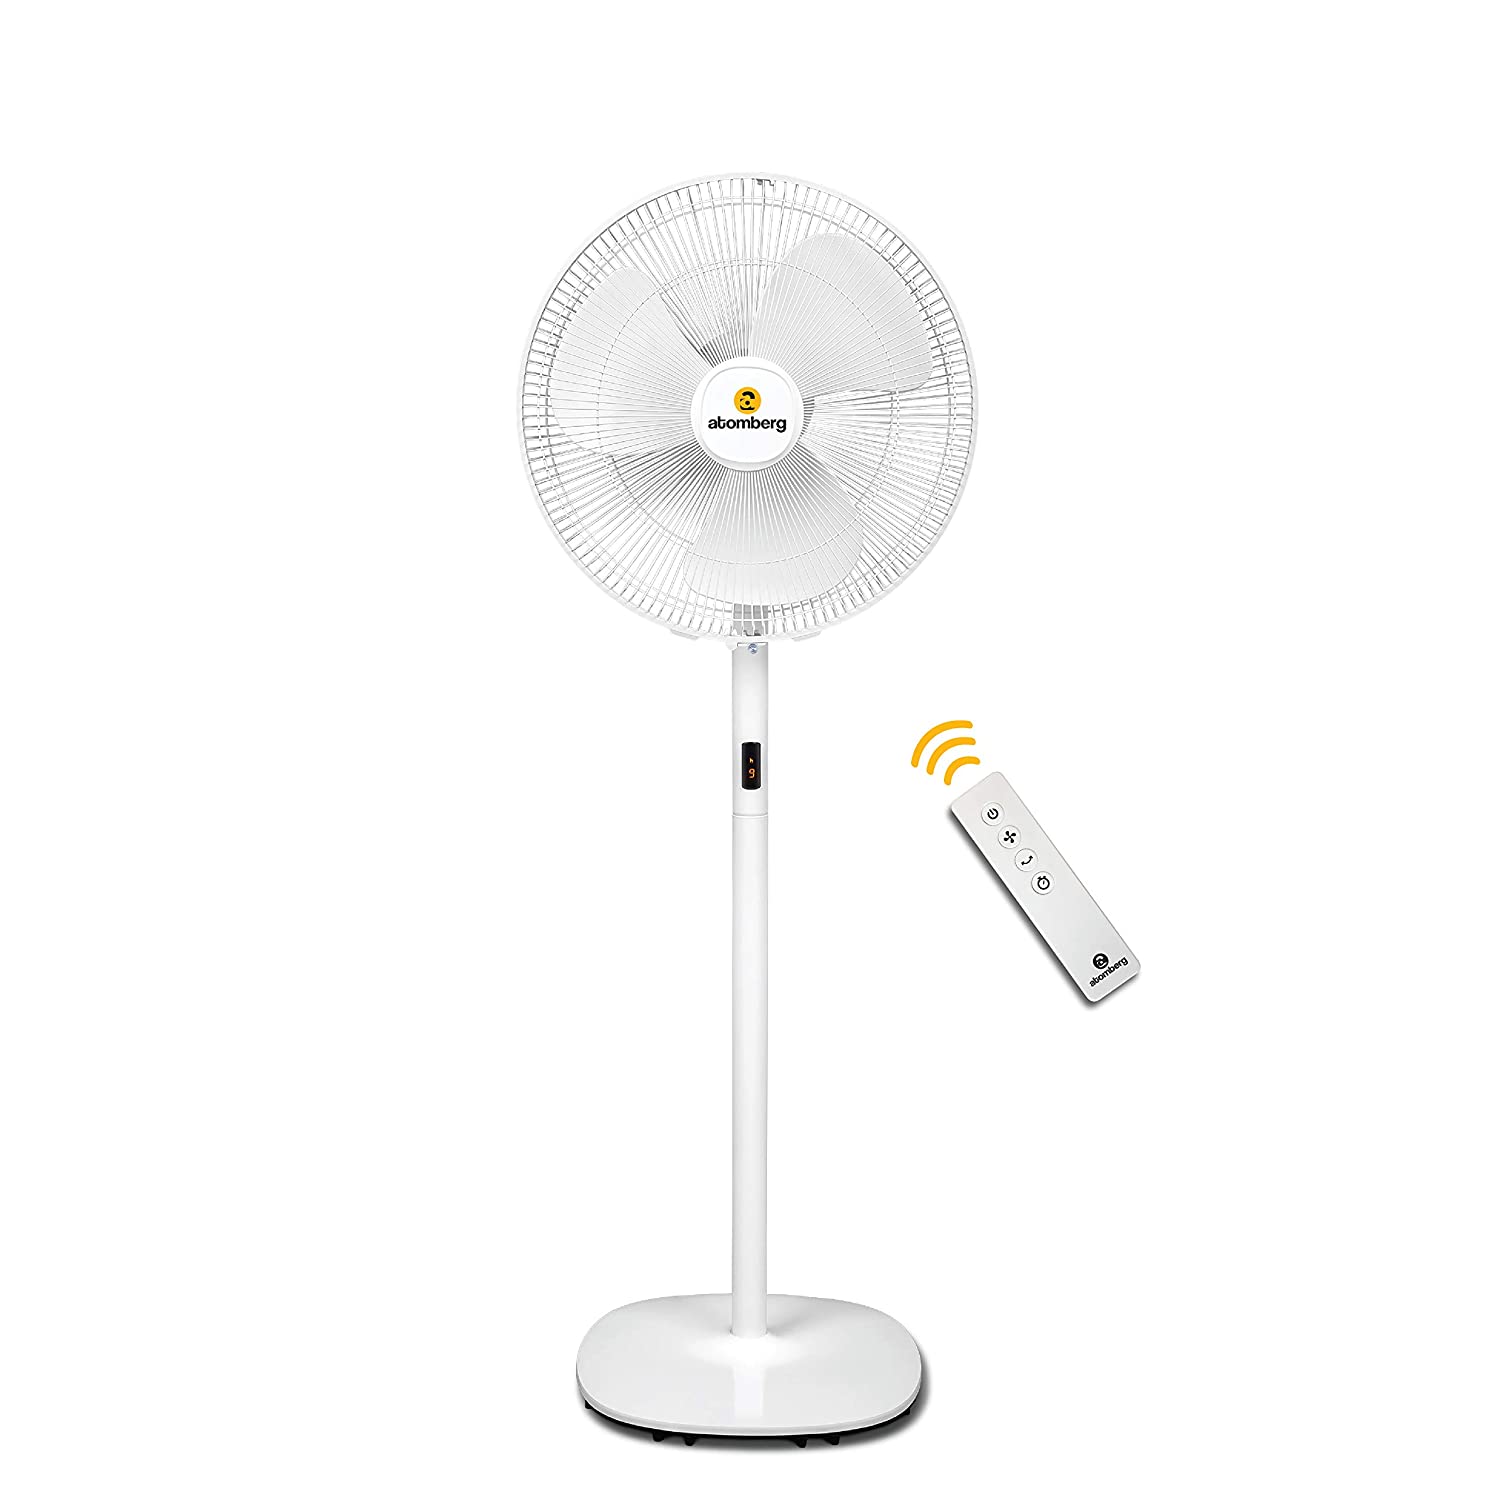 Atomberg Efficio+ BLDC motor Ceiling Fan